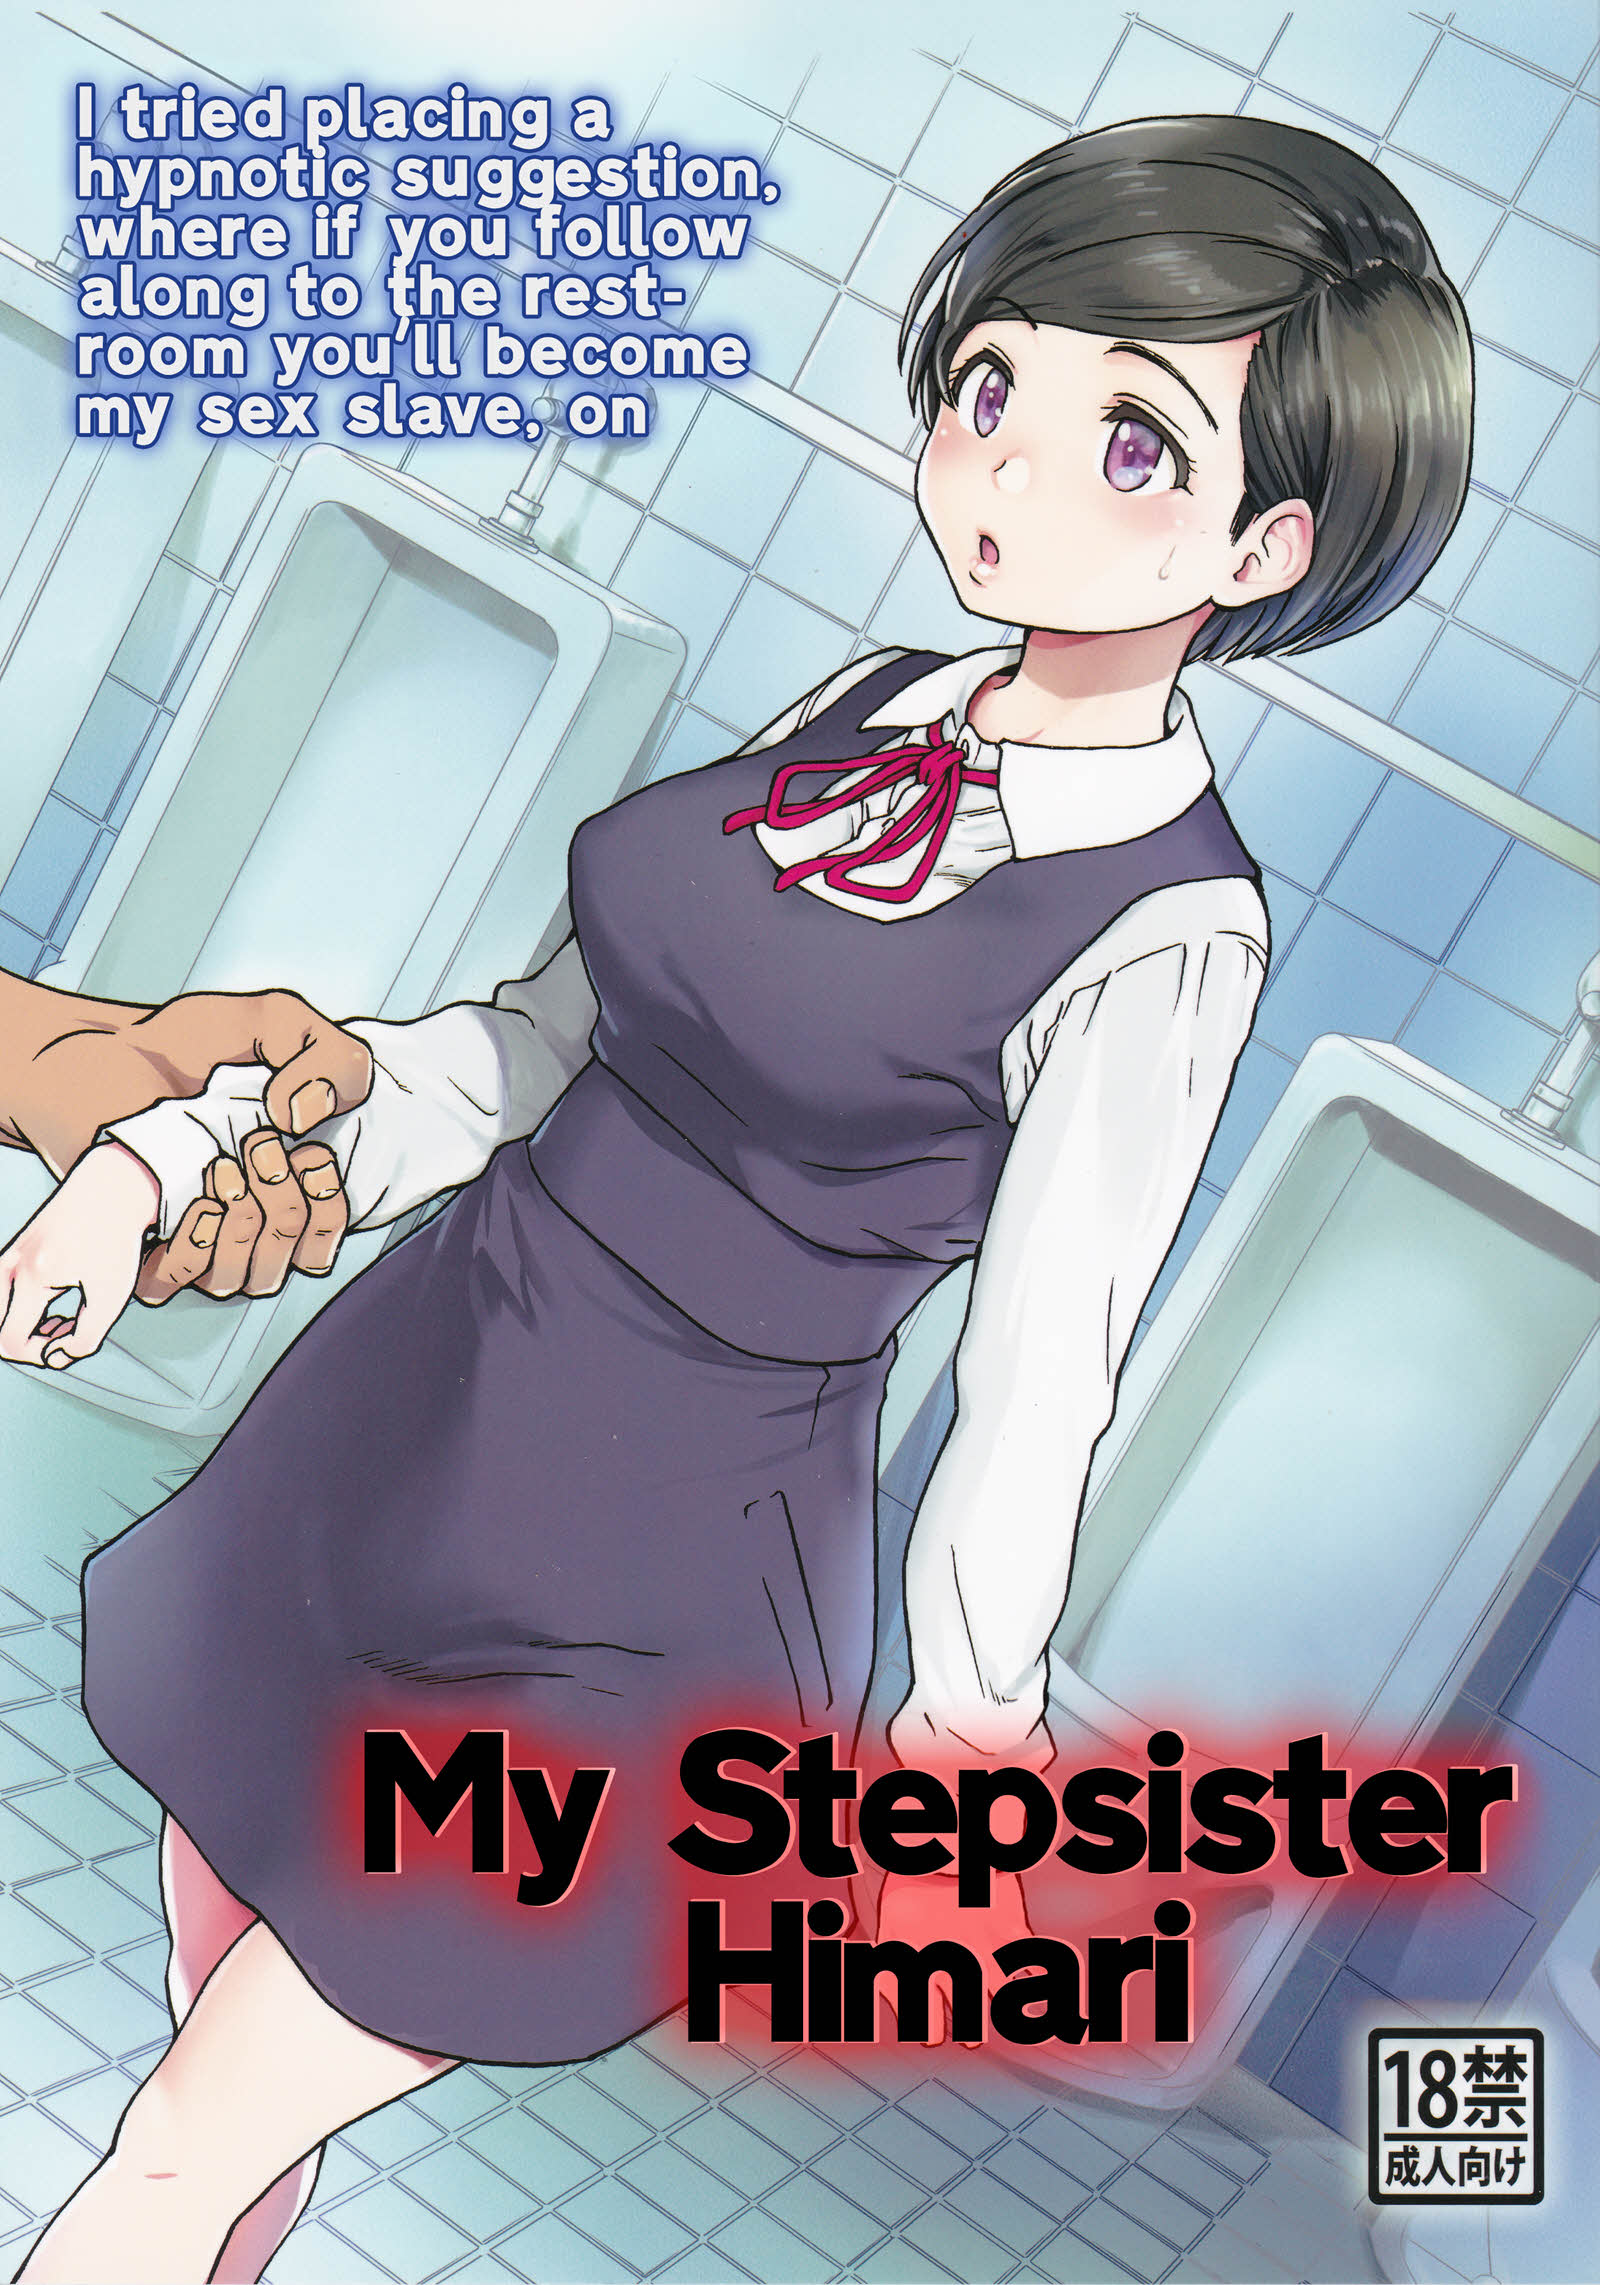 [Shiwasu no Okina] My Stepsister Himari loves incest Hentai Comics